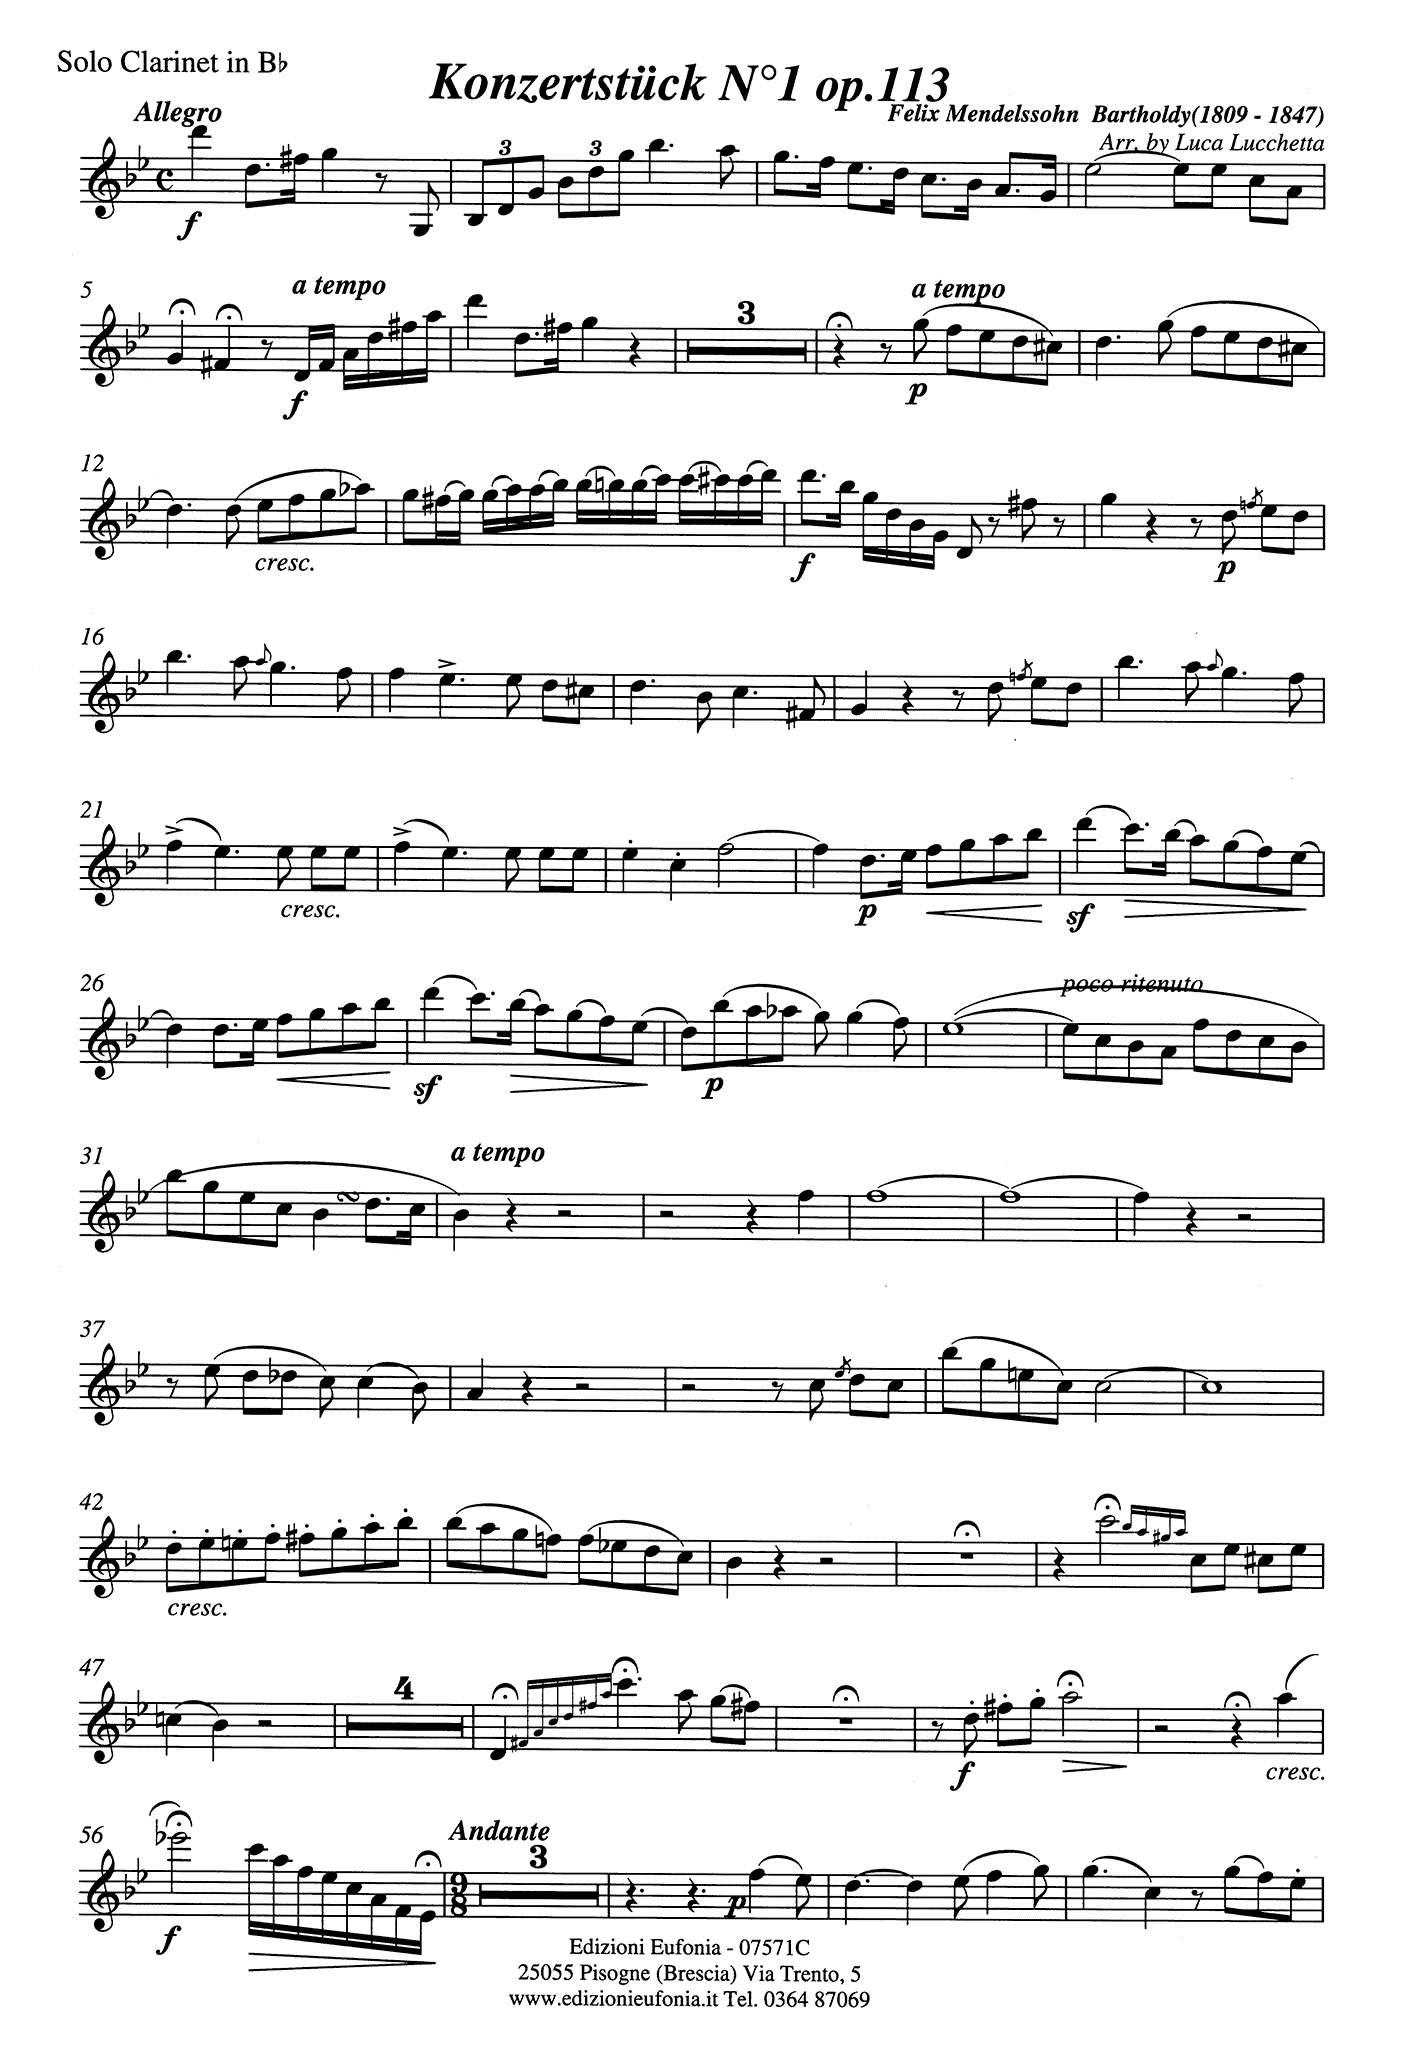 Konzertstück No. 1 in F Minor, Op. 113 B-flat Clarinet solo part